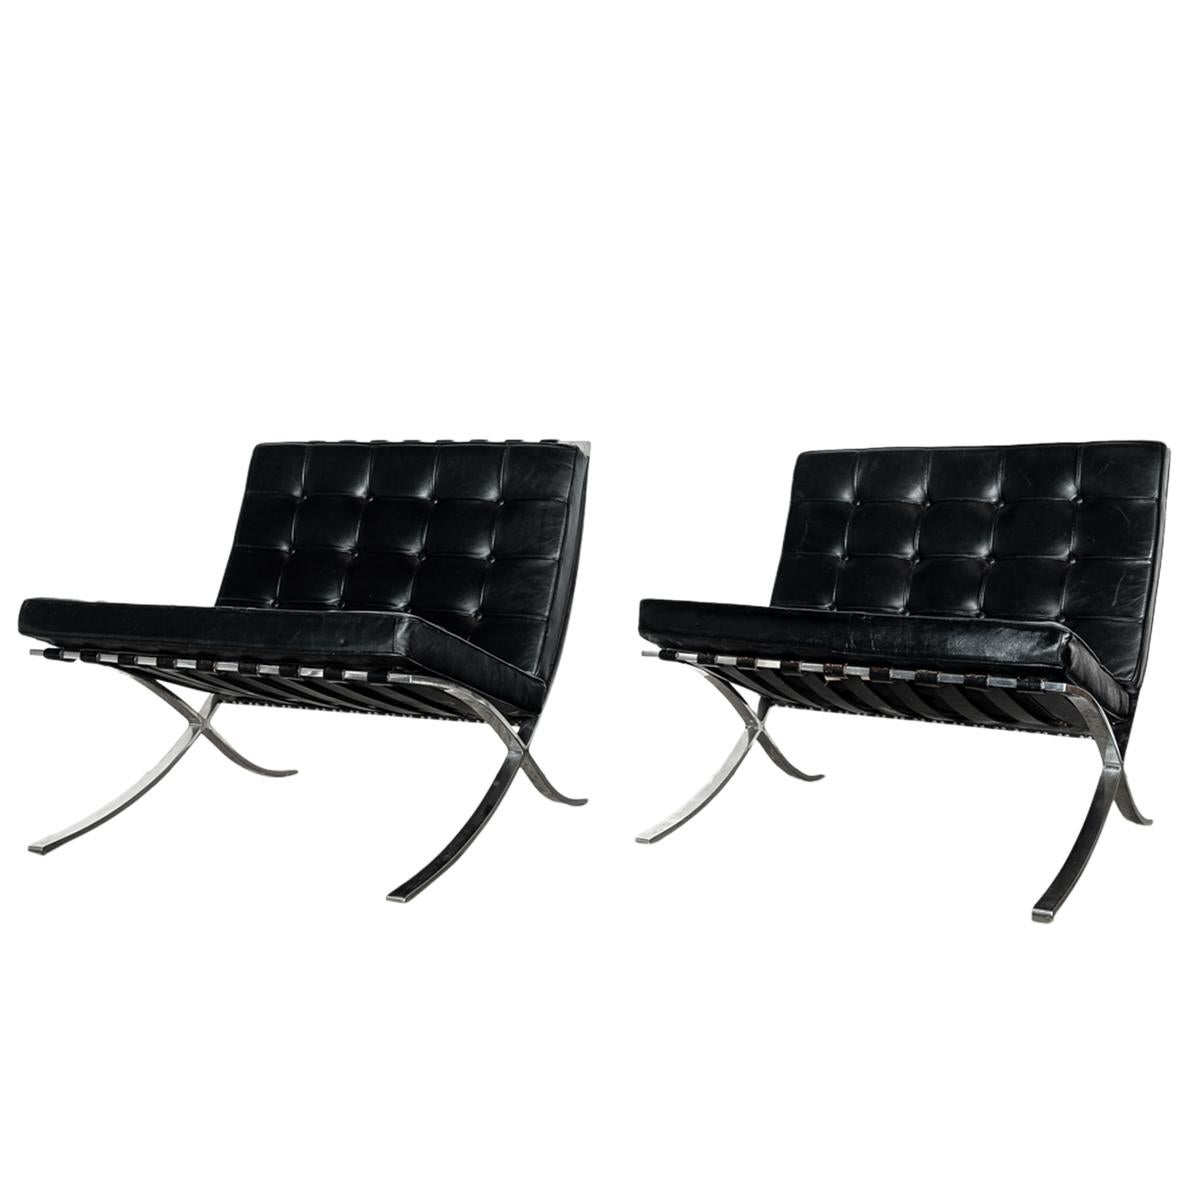 Frühes Paar MCM Knoll Barcelona-Stühle, Mies van der Rohe 1961, schwarzes Leder (Stahl) im Angebot